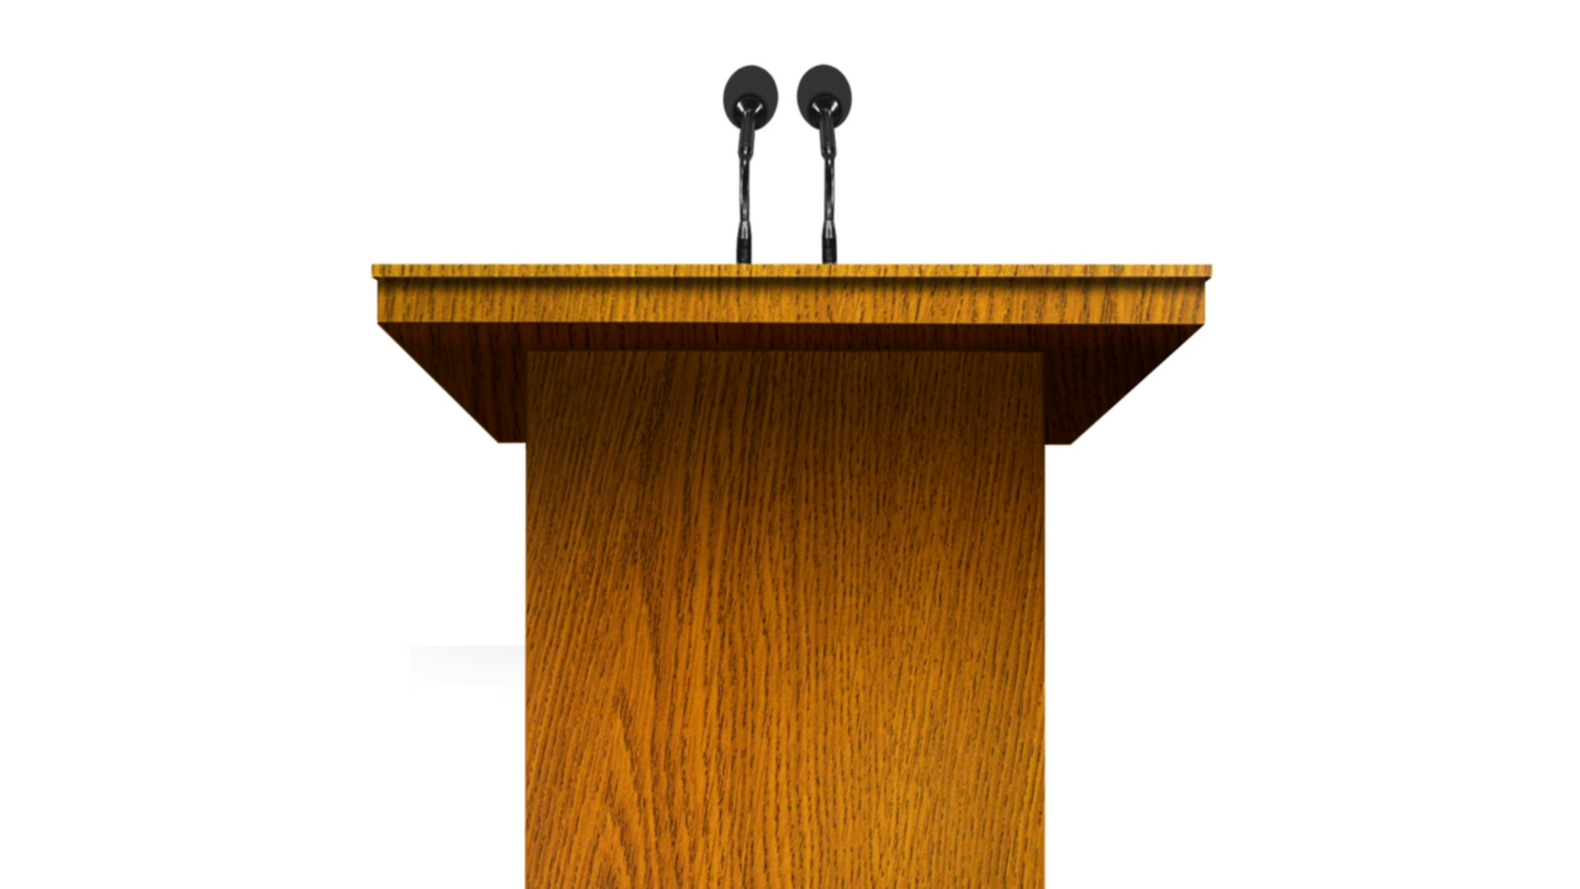 wood podium with microphones